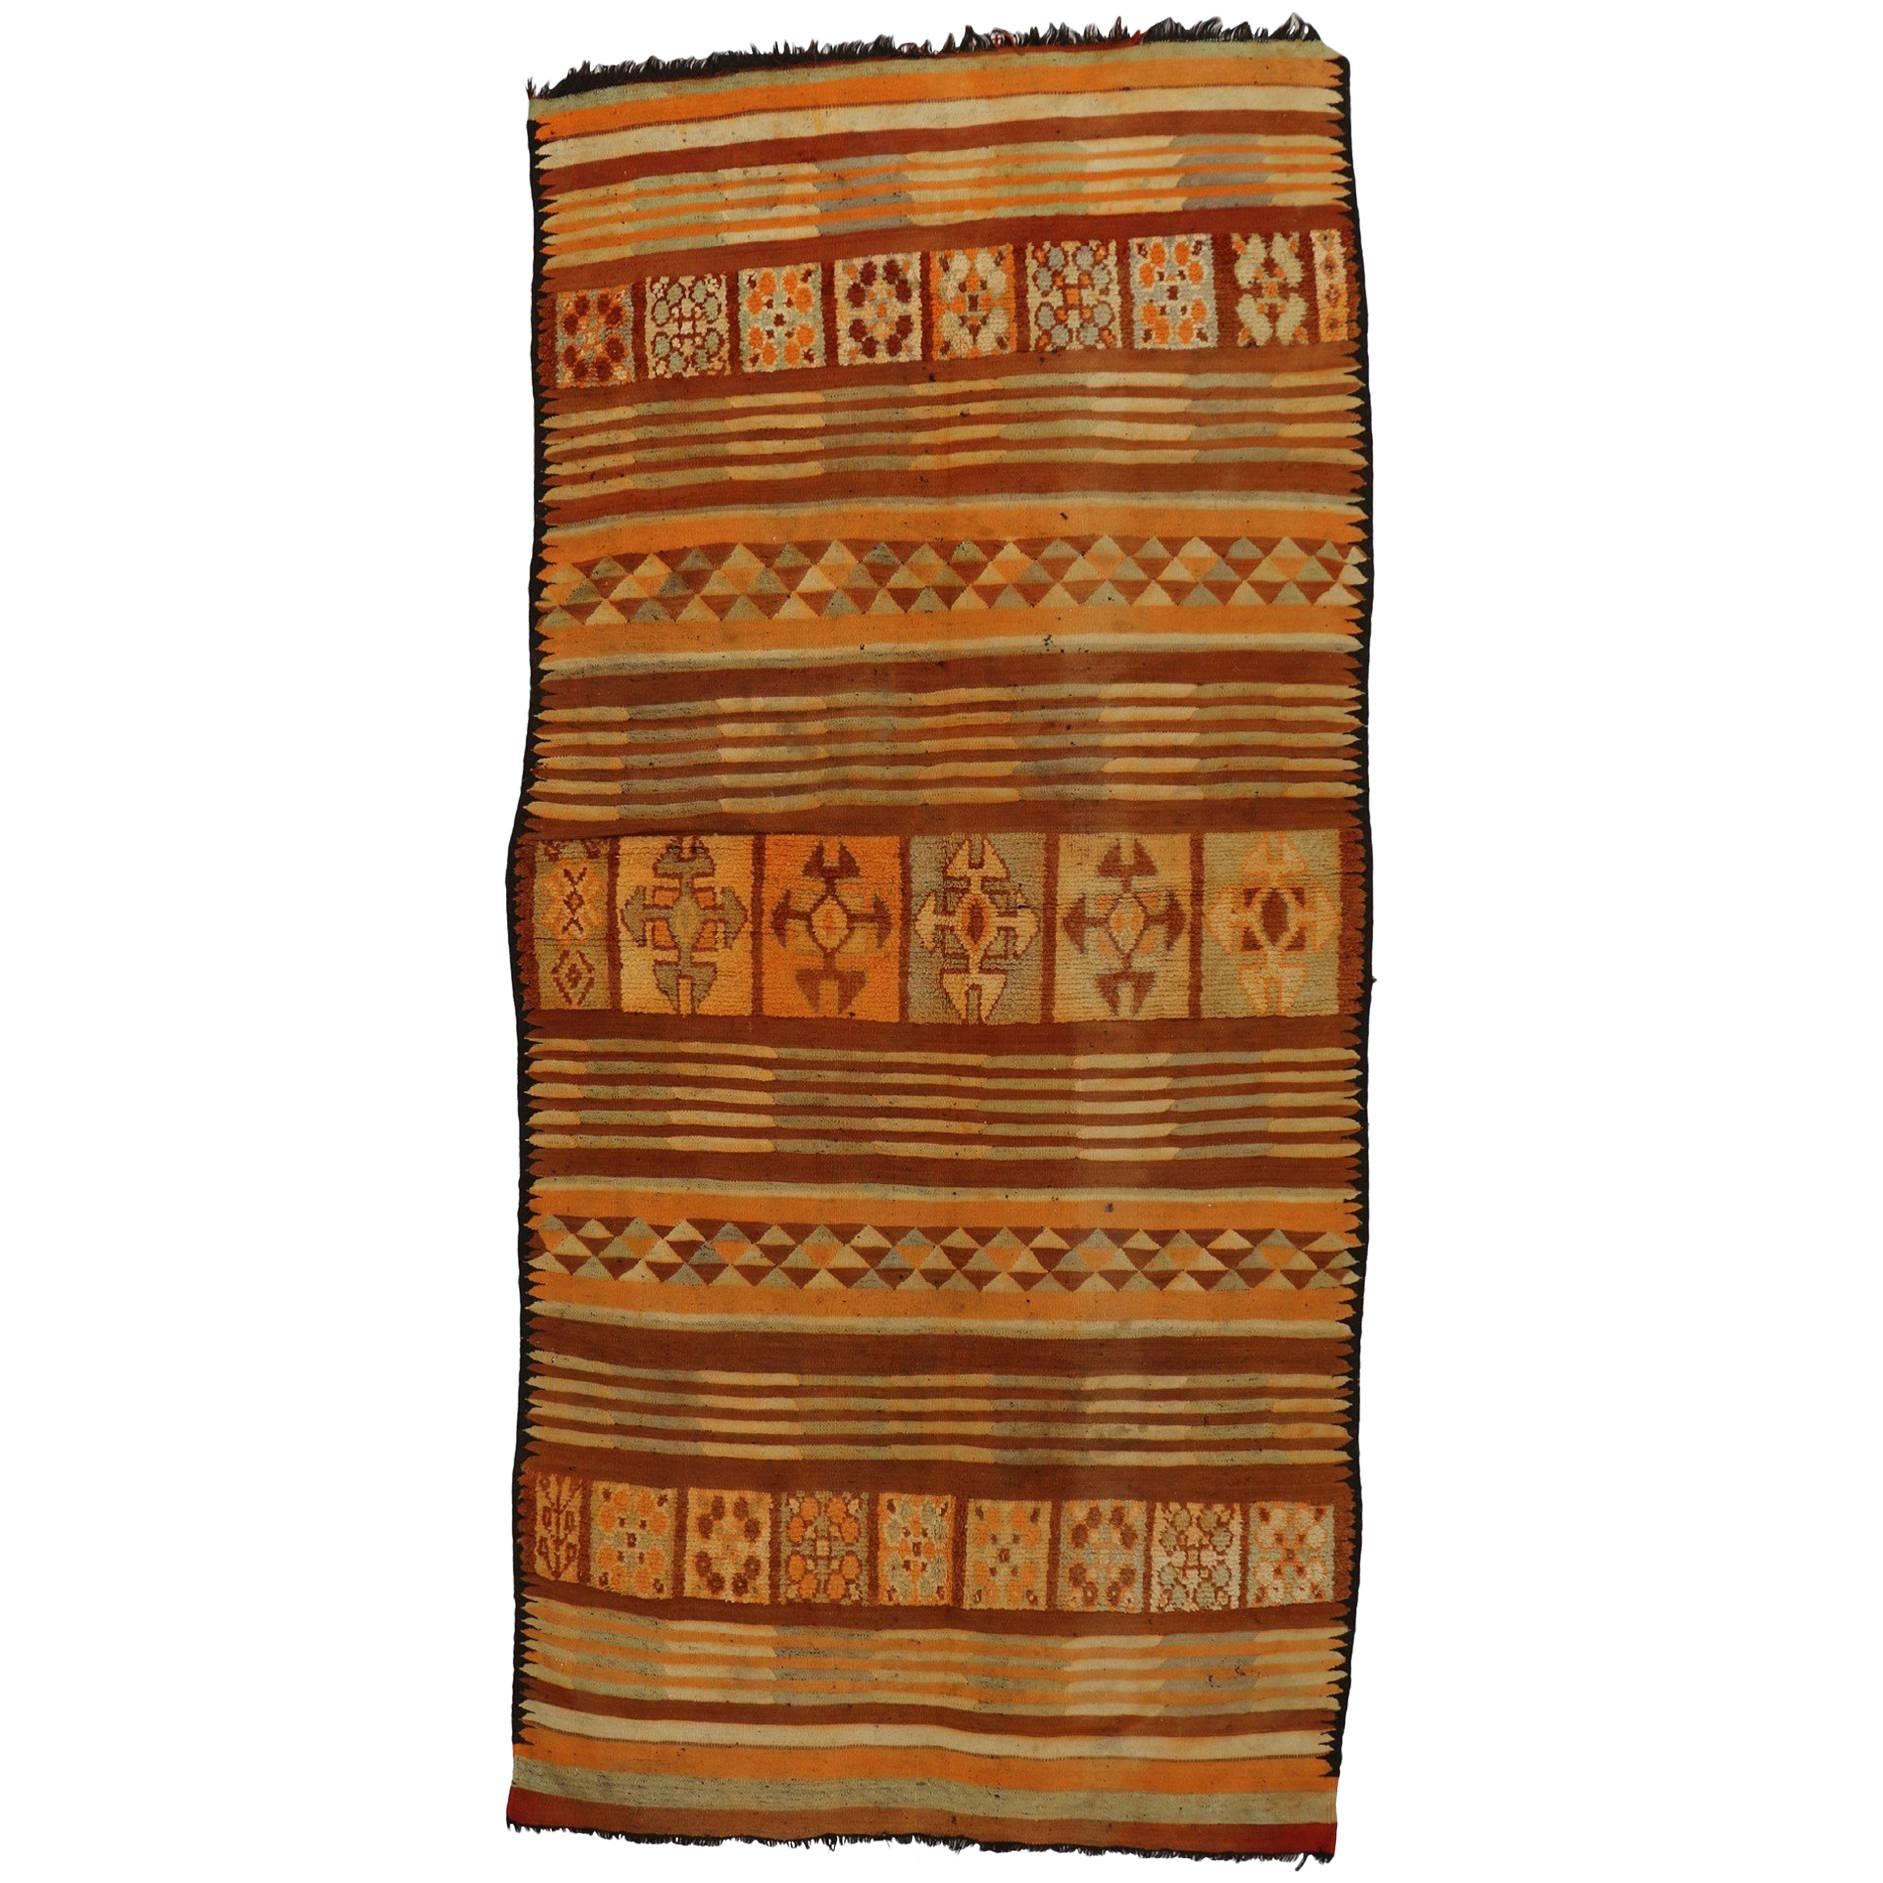 Tapis Kilim berbère marocain vintage avec style cabine moderne, tapis Kilim à tissage plat 